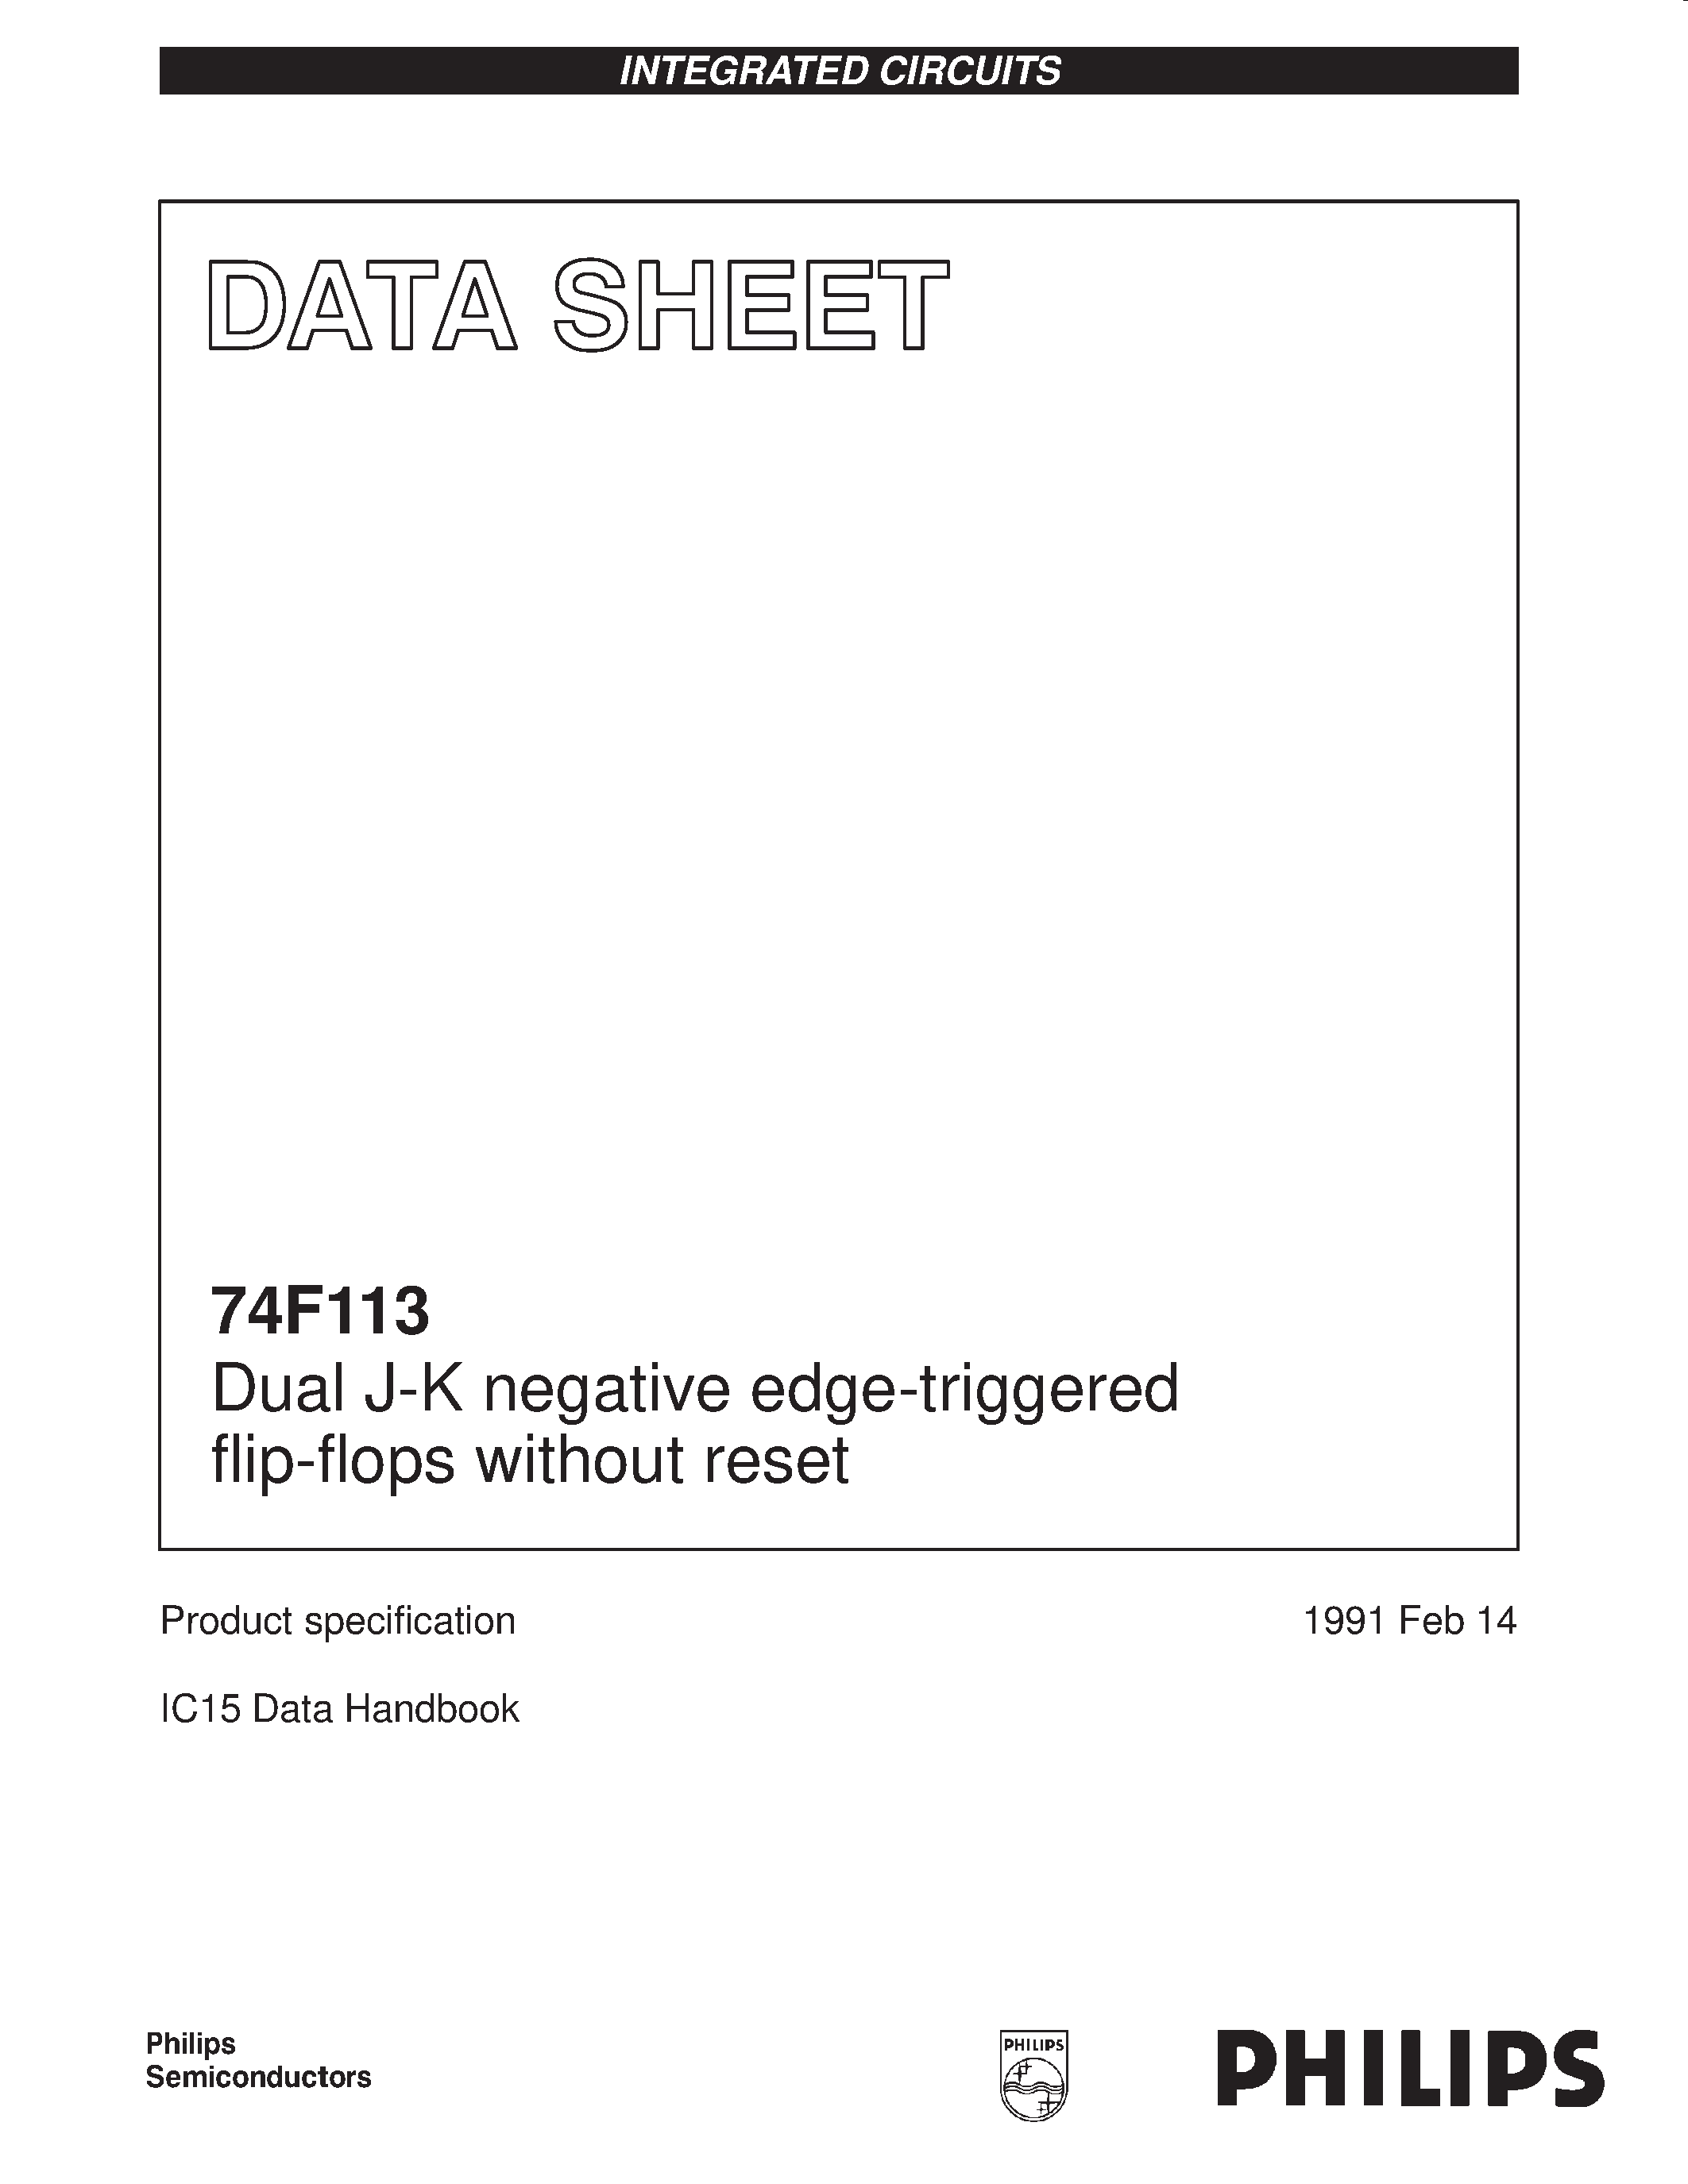 Datasheet 74F113 - Dual J-K negative edge-triggered flip-flops without reset page 1